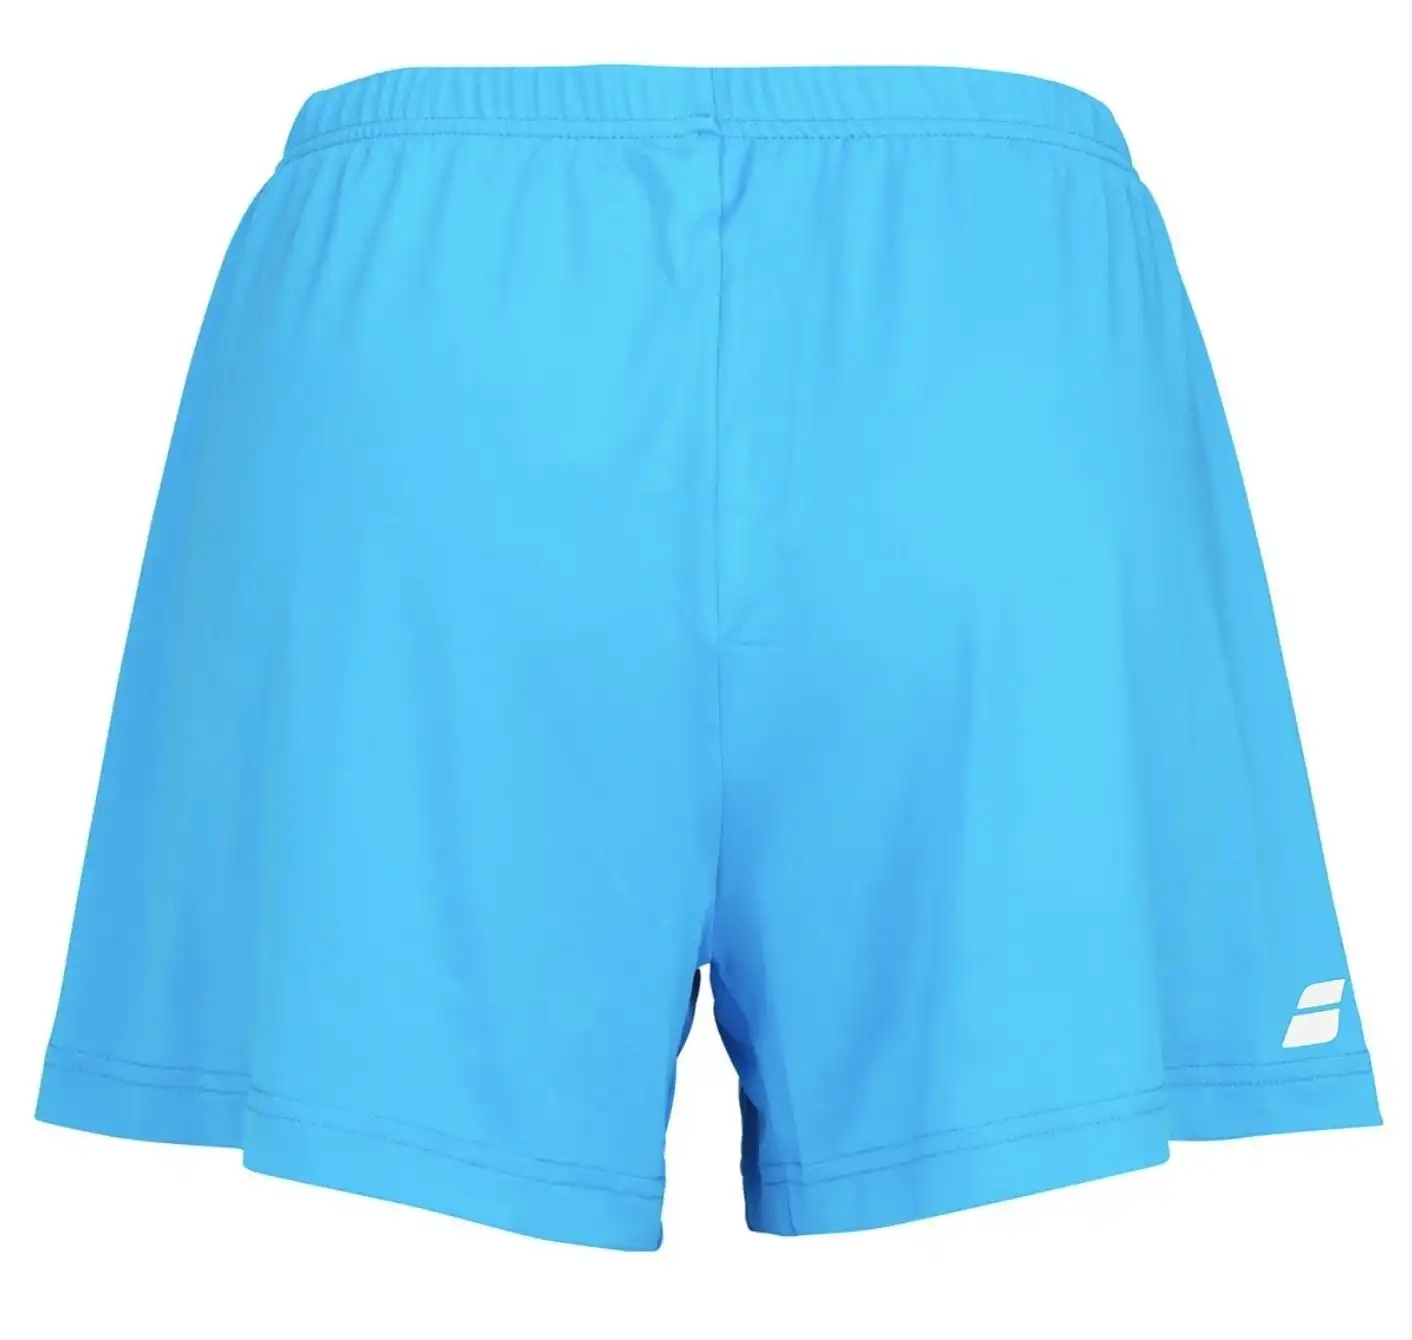 Babolat Women's Tennis Match Shorts Gym Sports - Turquoise